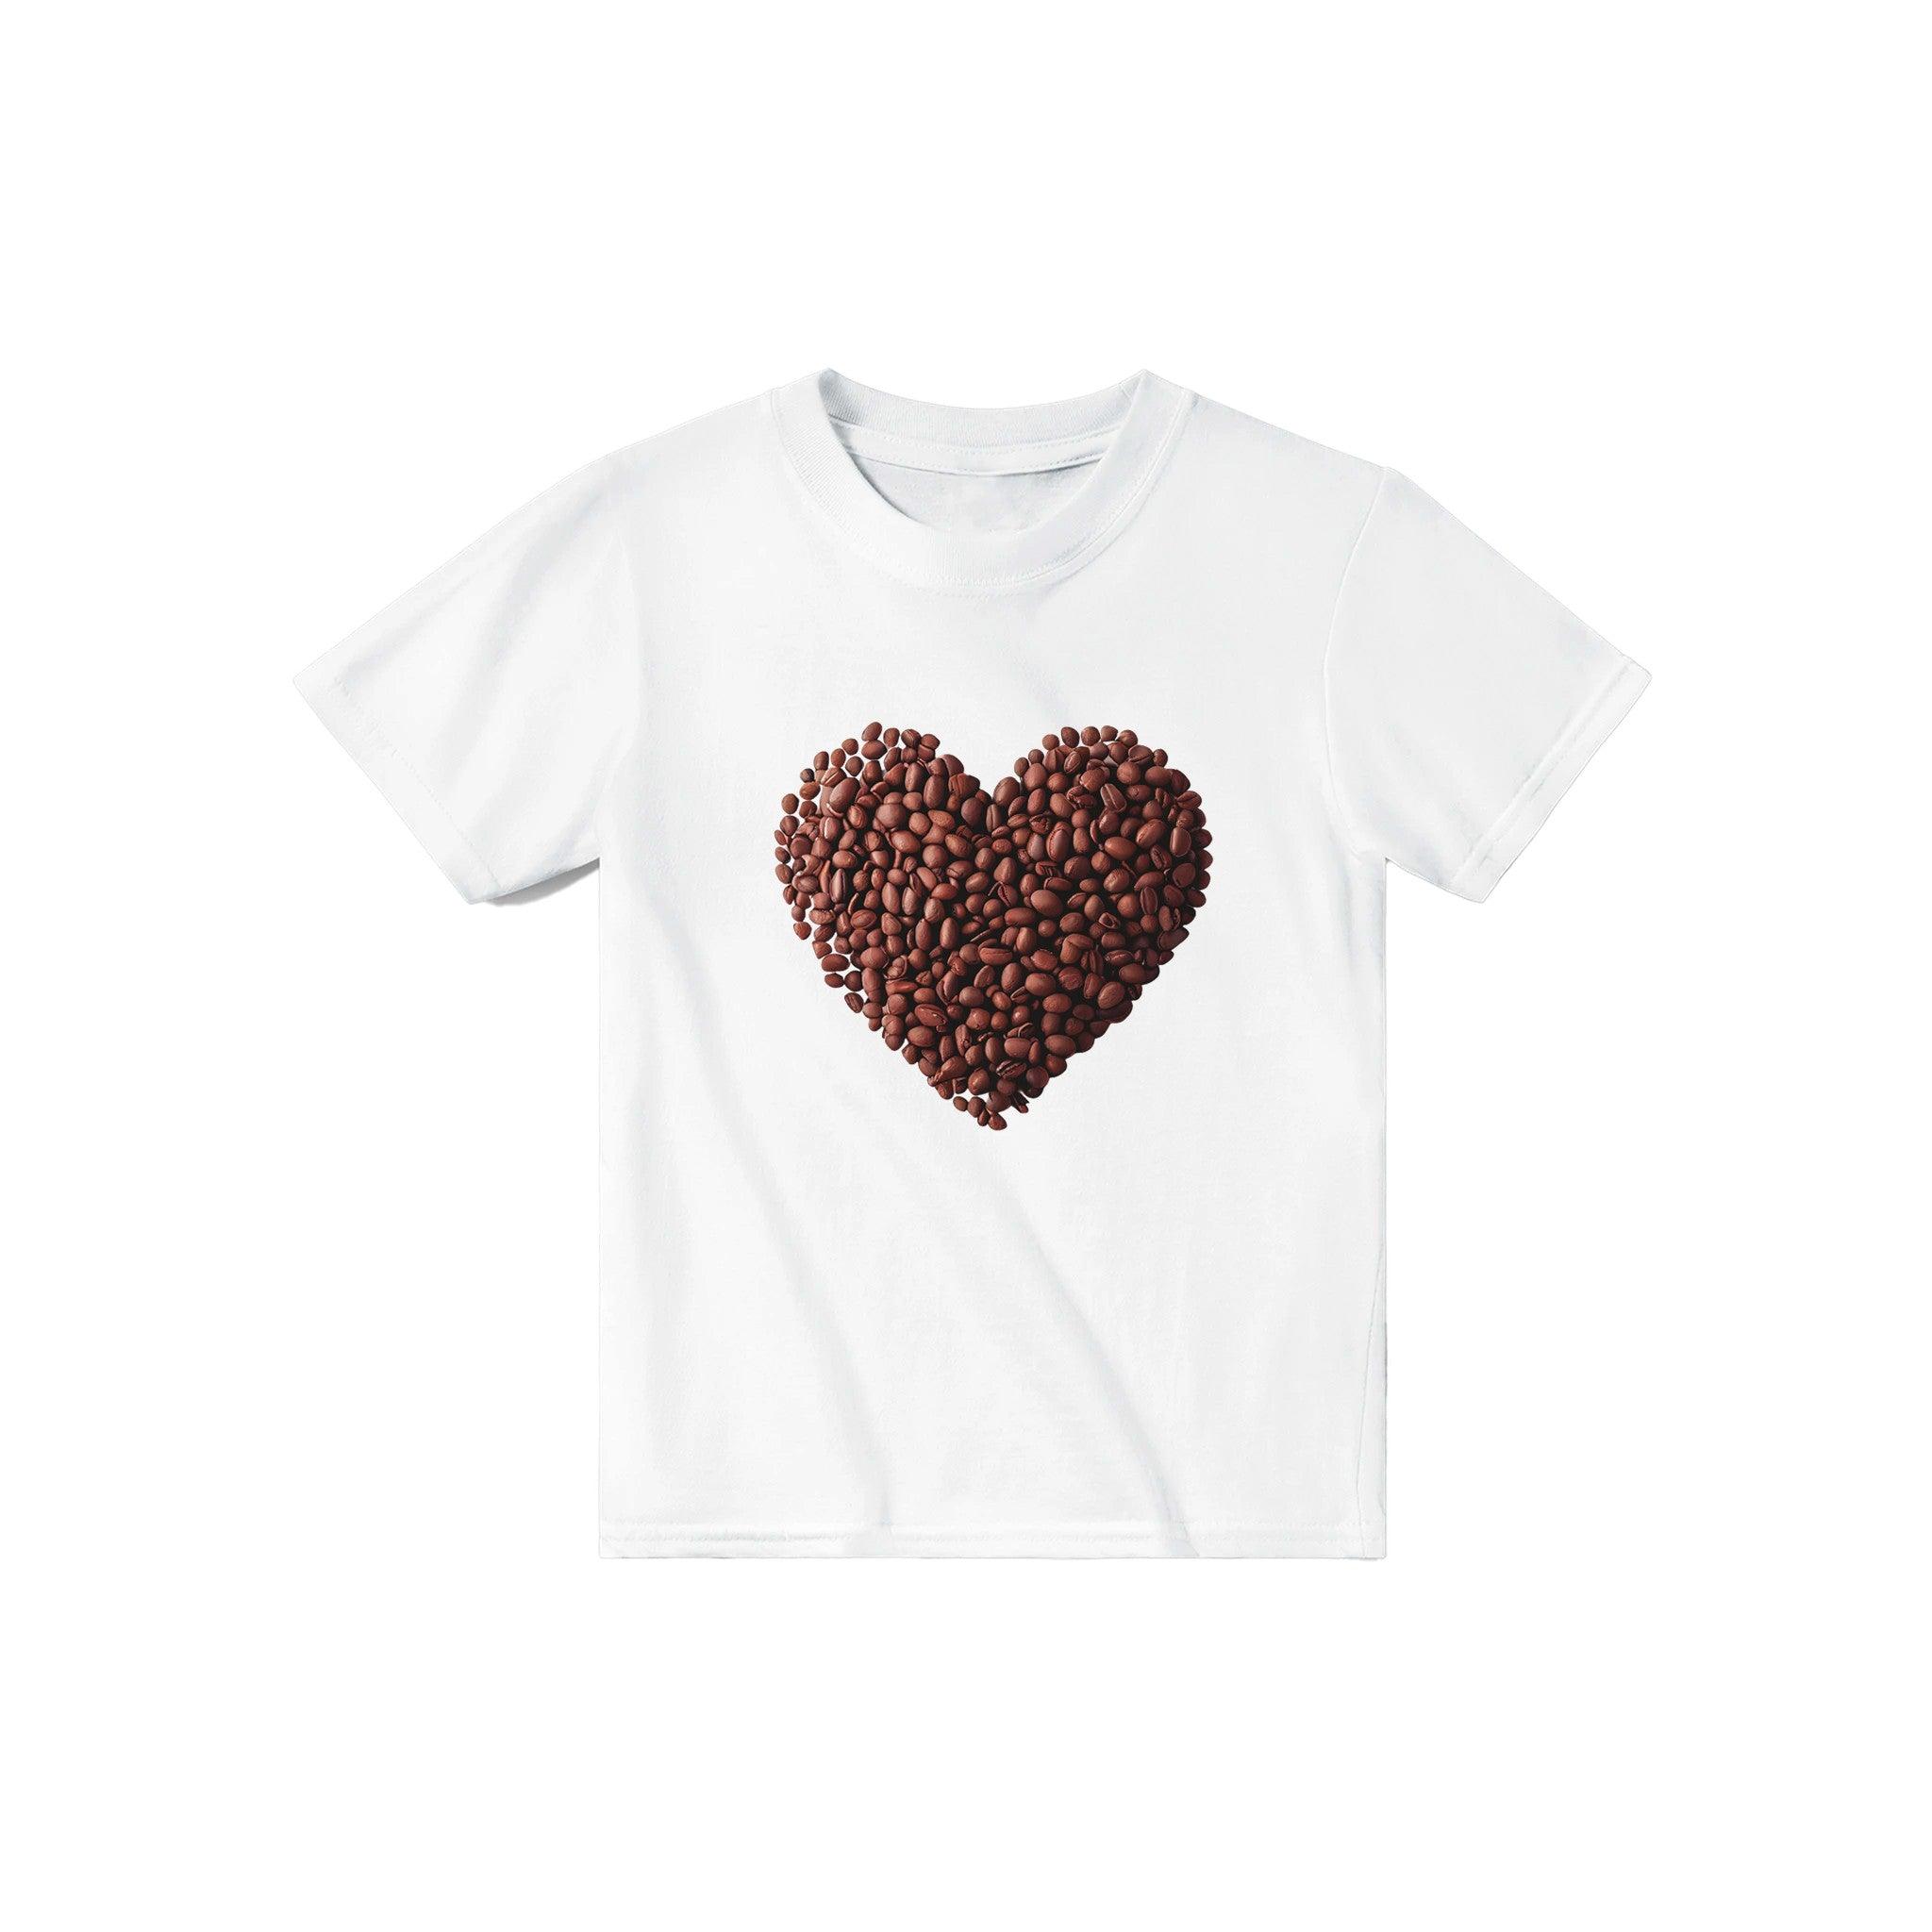 'Heart for Coffee' Baby Tee - POMA